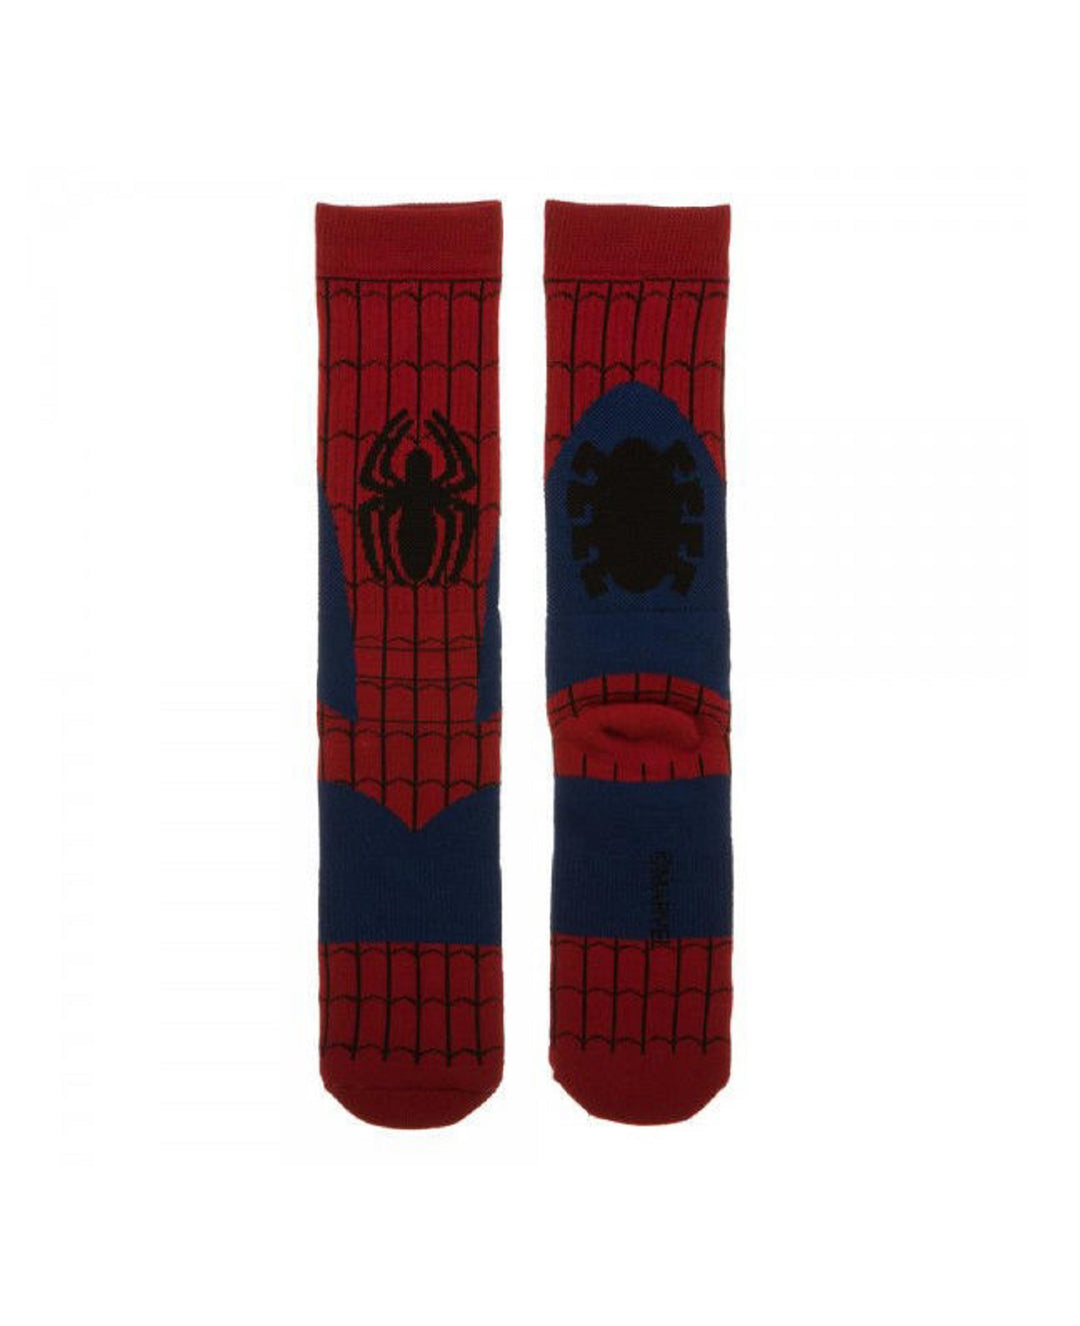 Marvel Ultimate Spider man 360 Character Adult Crew Socks